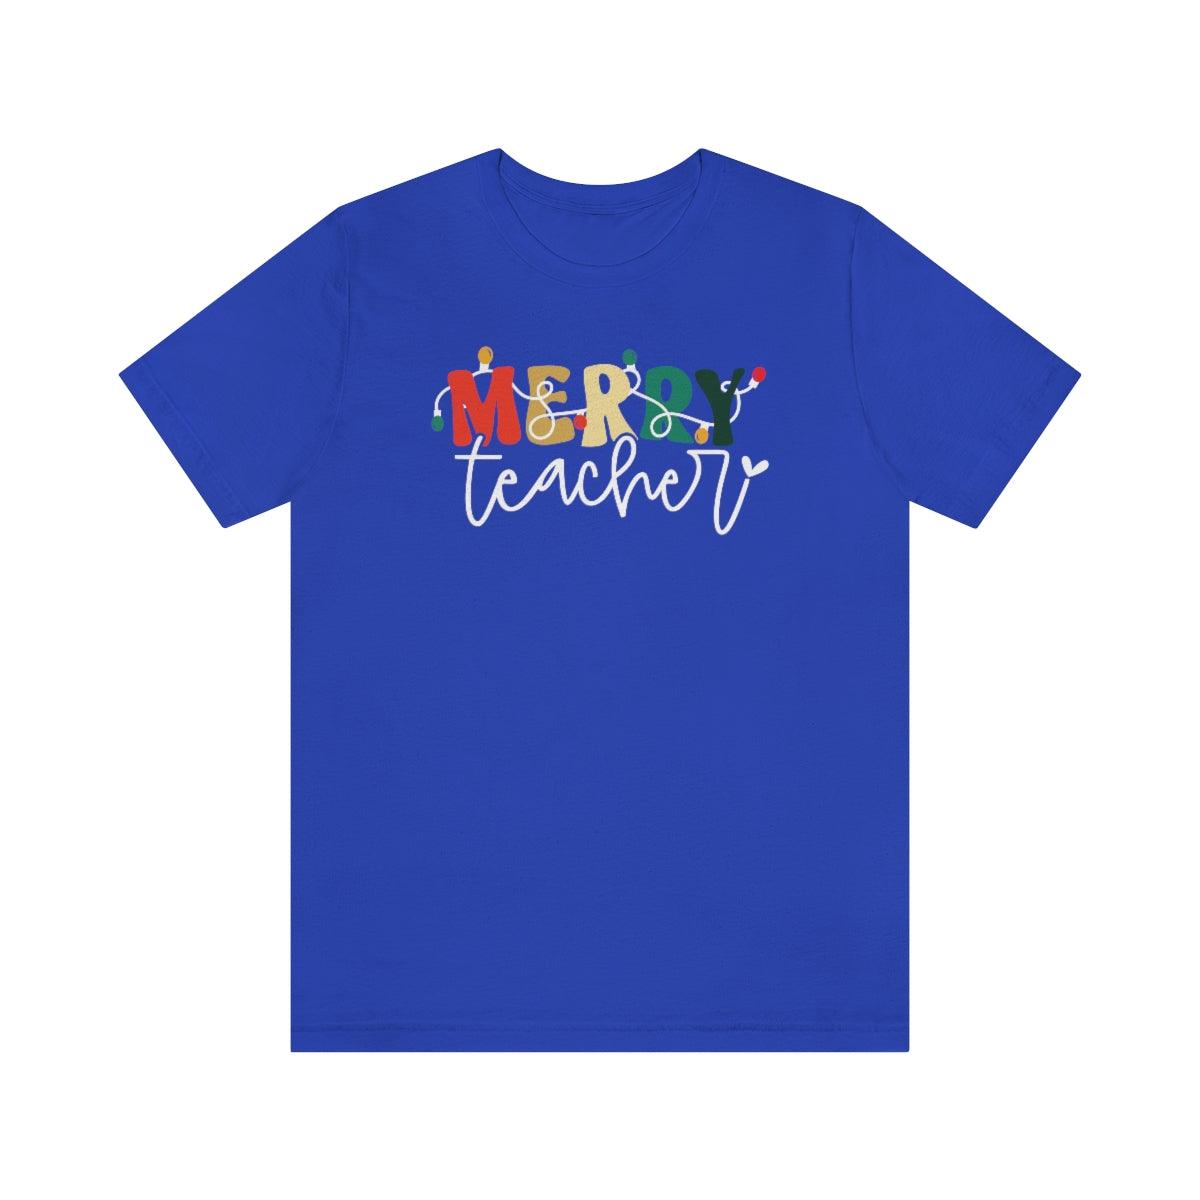 Retro Merry Teacher Christmas Shirt Short Sleeve Tee - Crystal Rose Design Co.